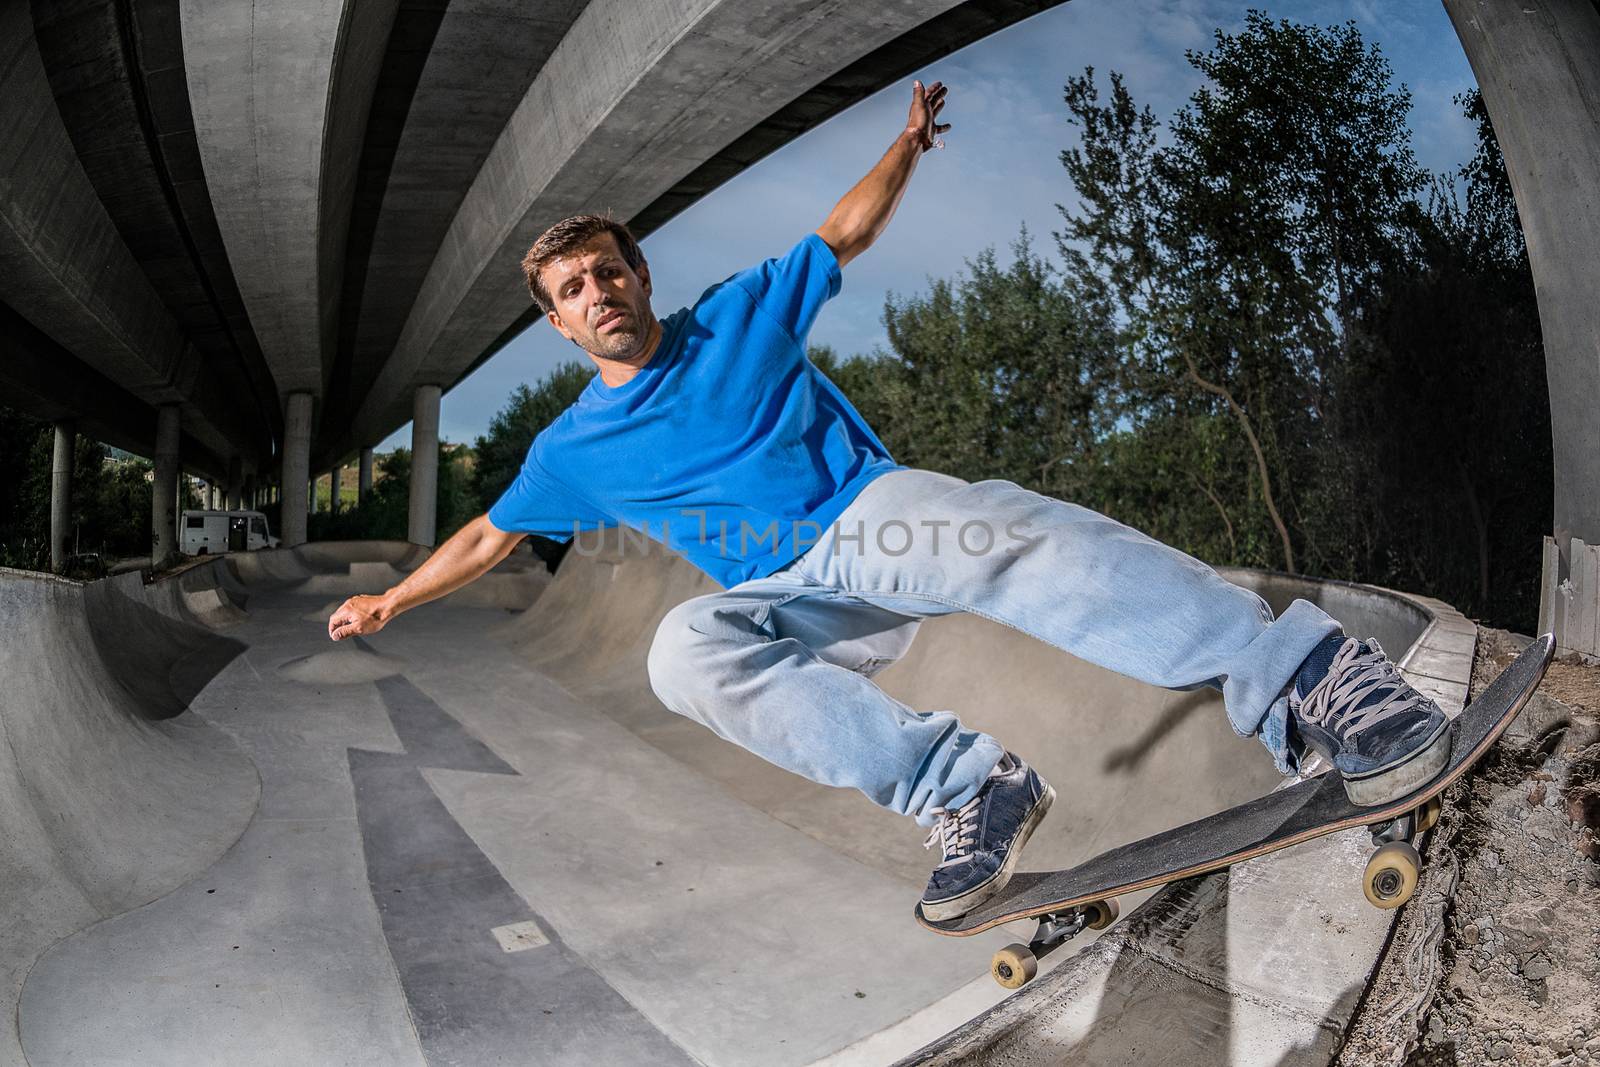 Skateboarder in a concrete skatepark under a highway bridge.